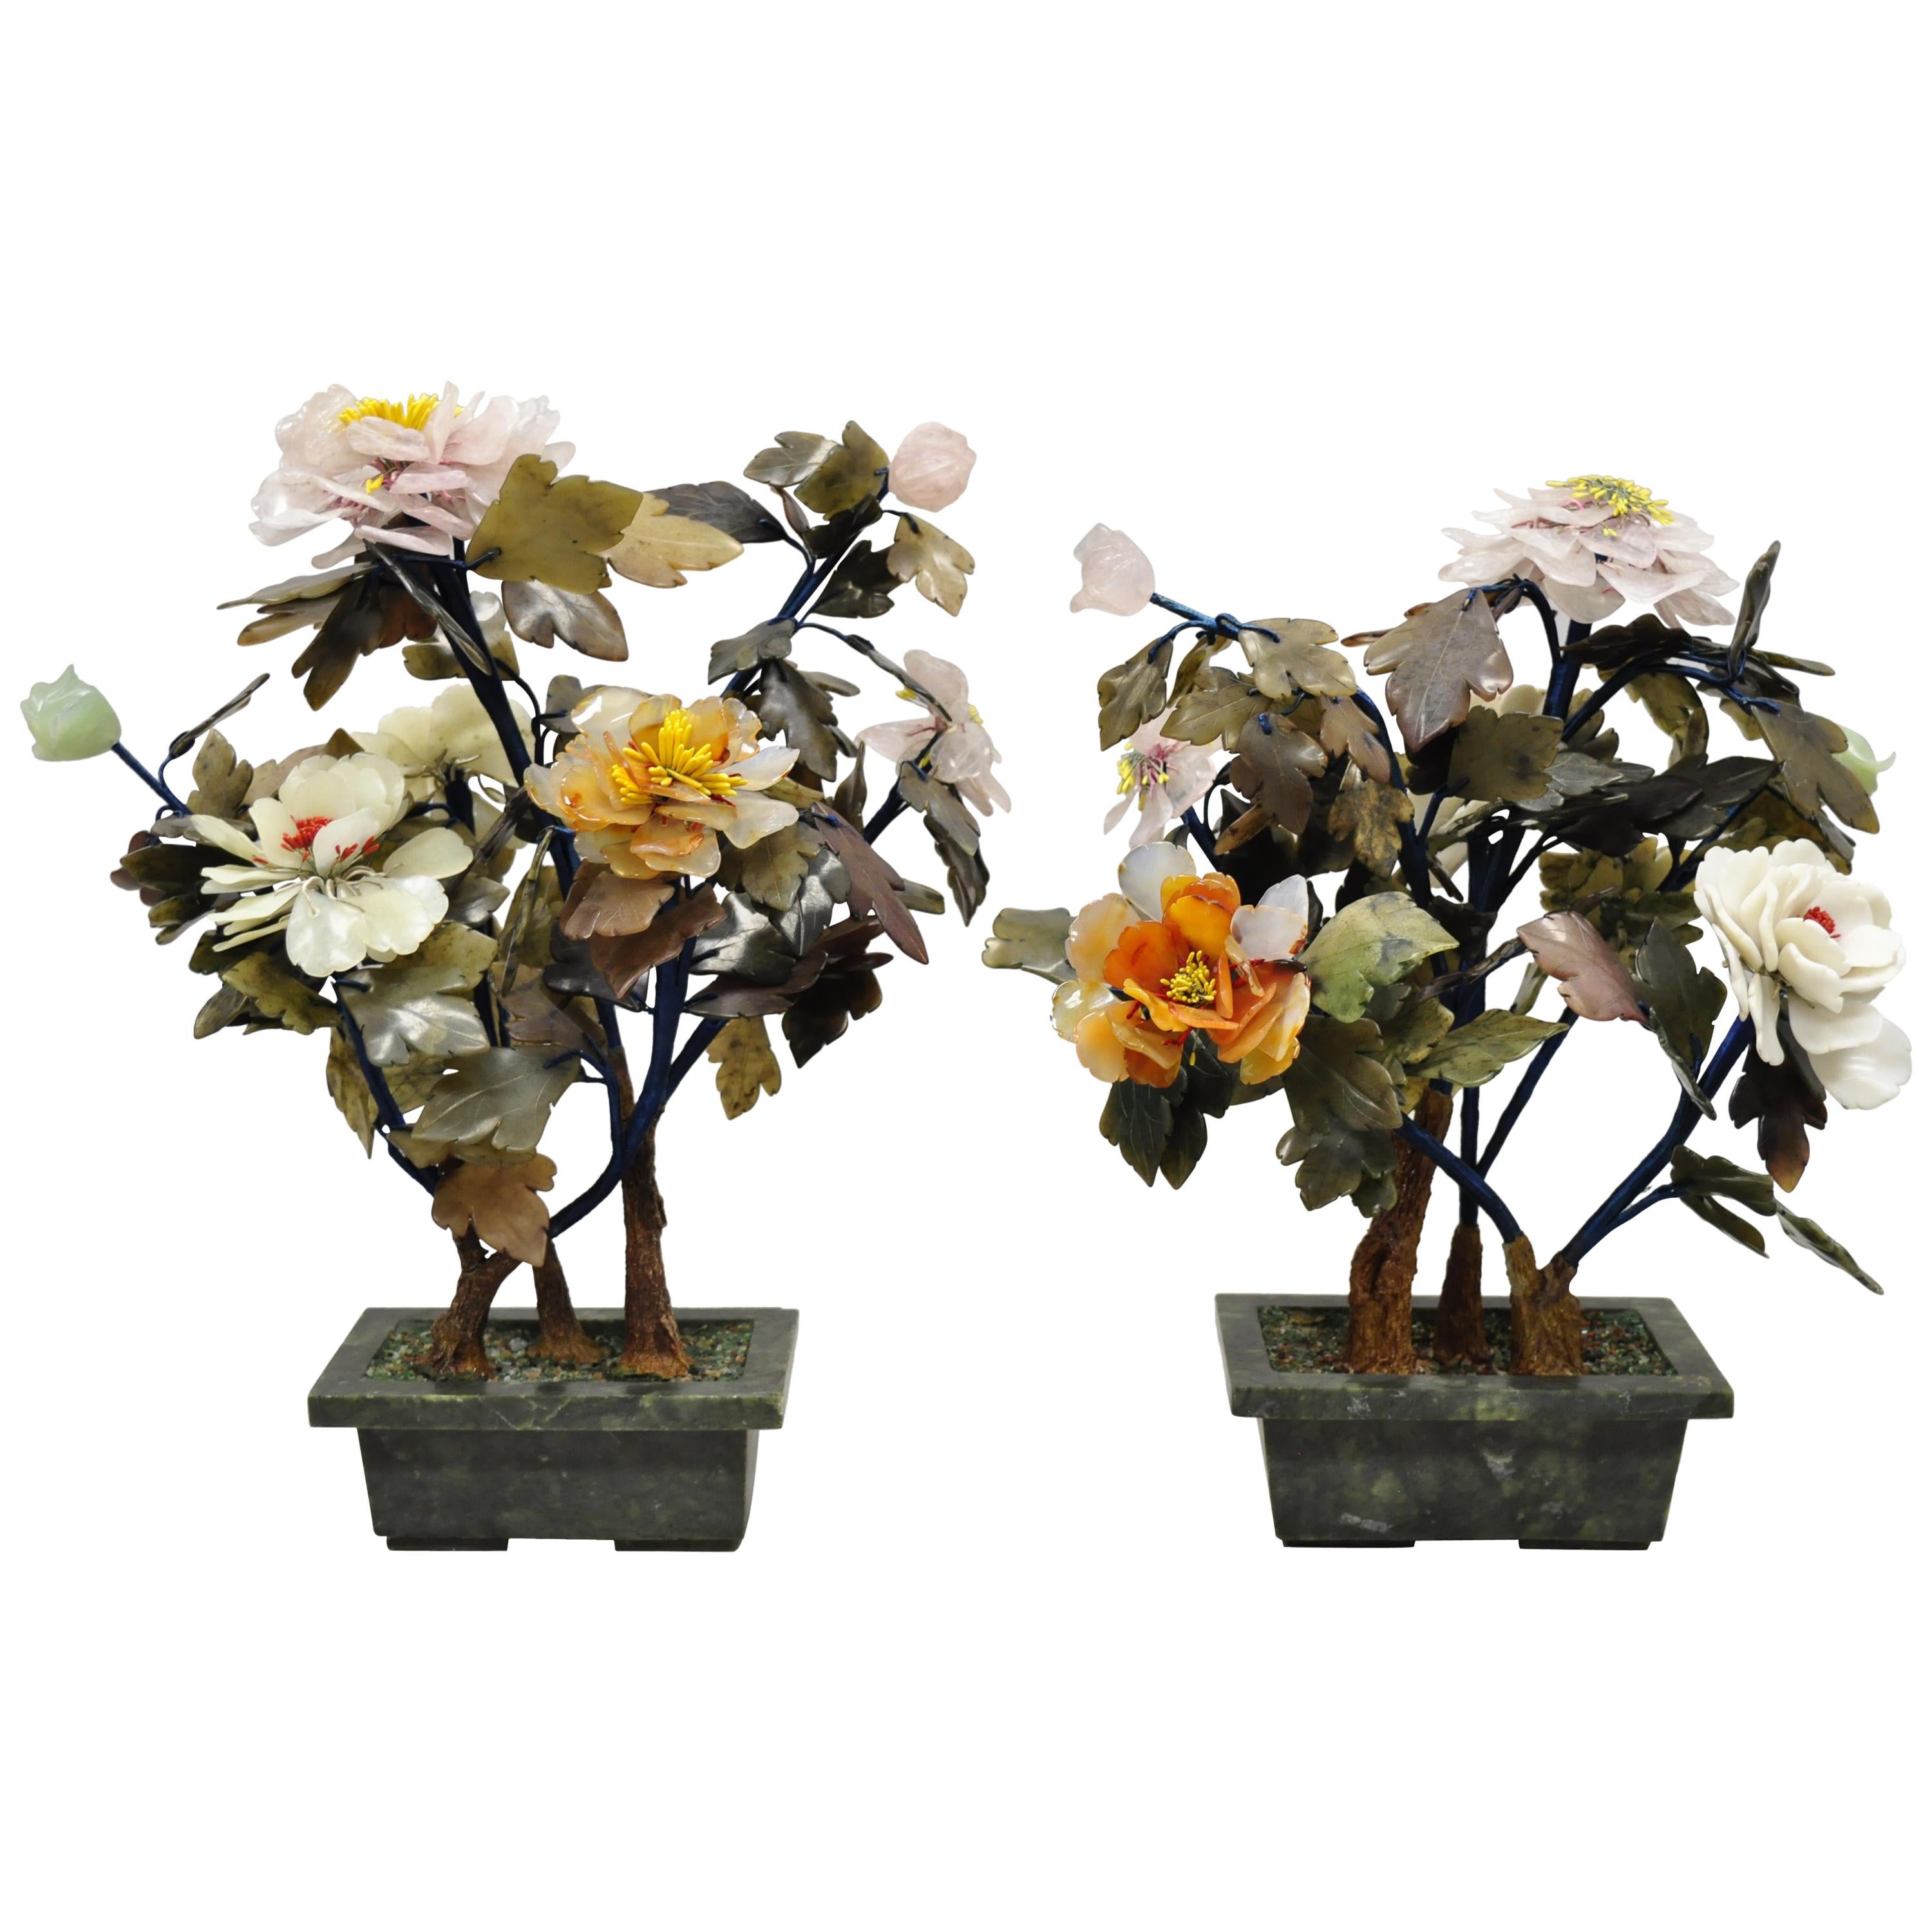 Pair of Vintage Glass and Soapstone Flower Bonsai Tree Centerpiece Sculpture